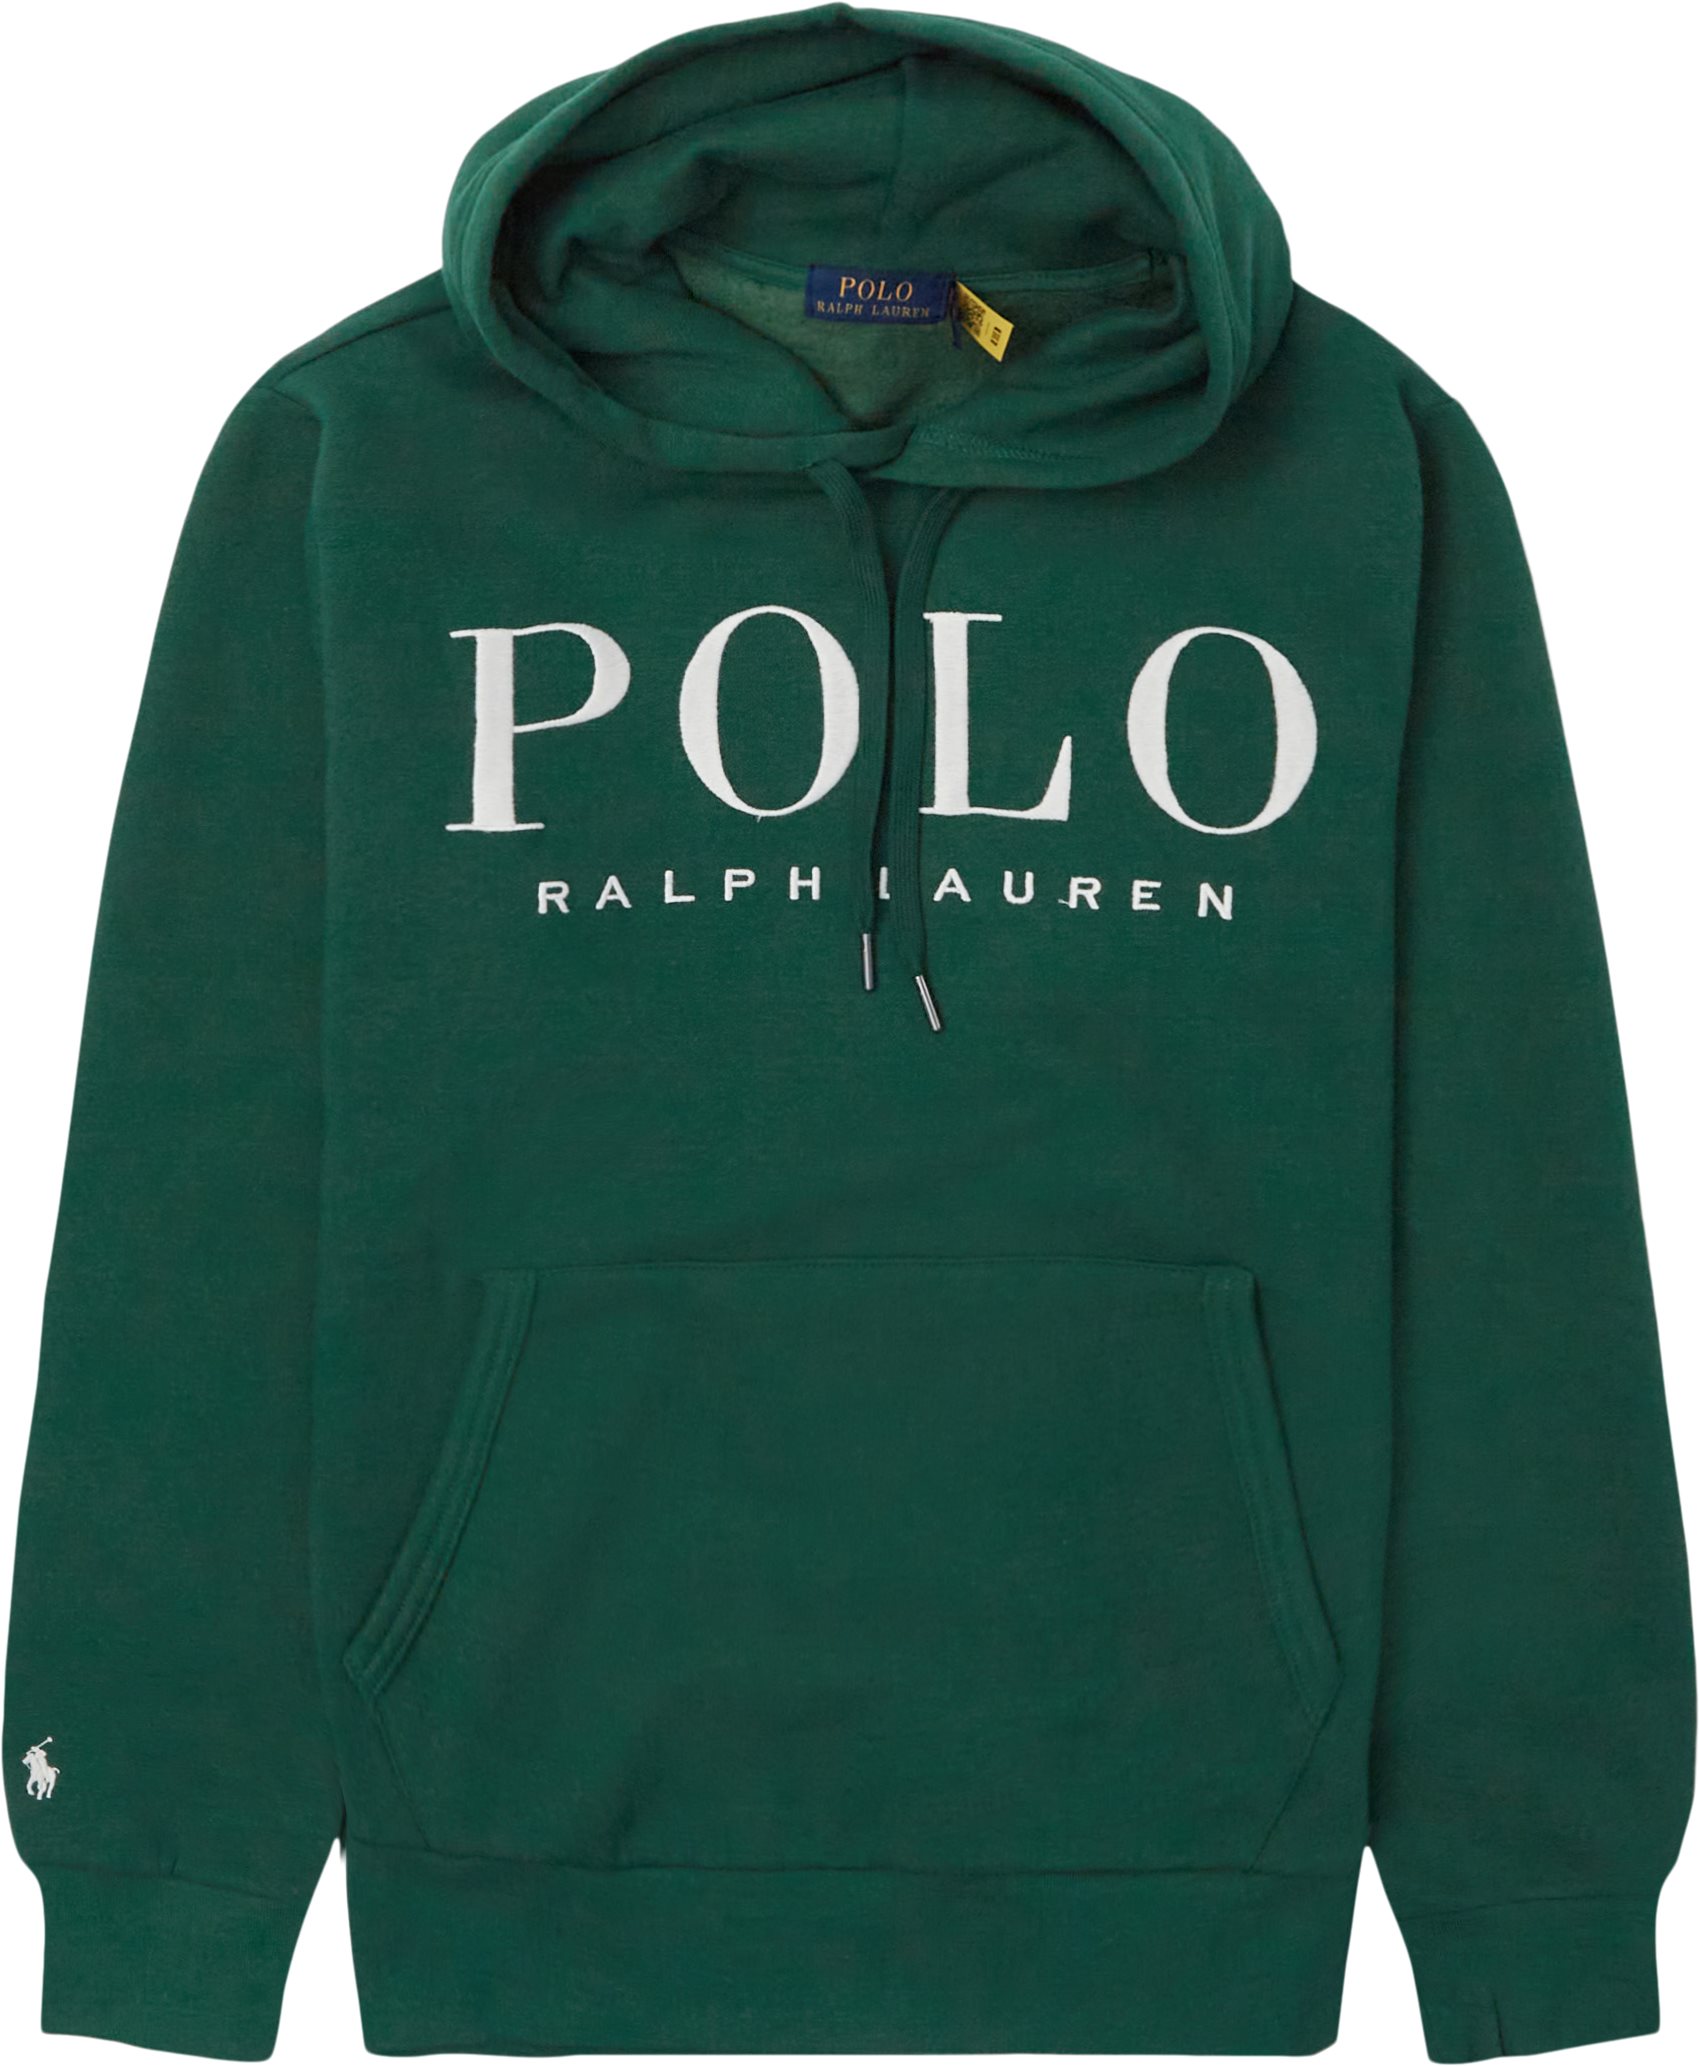 Polo Ralph Lauren Sweatshirts 710860831 Grøn